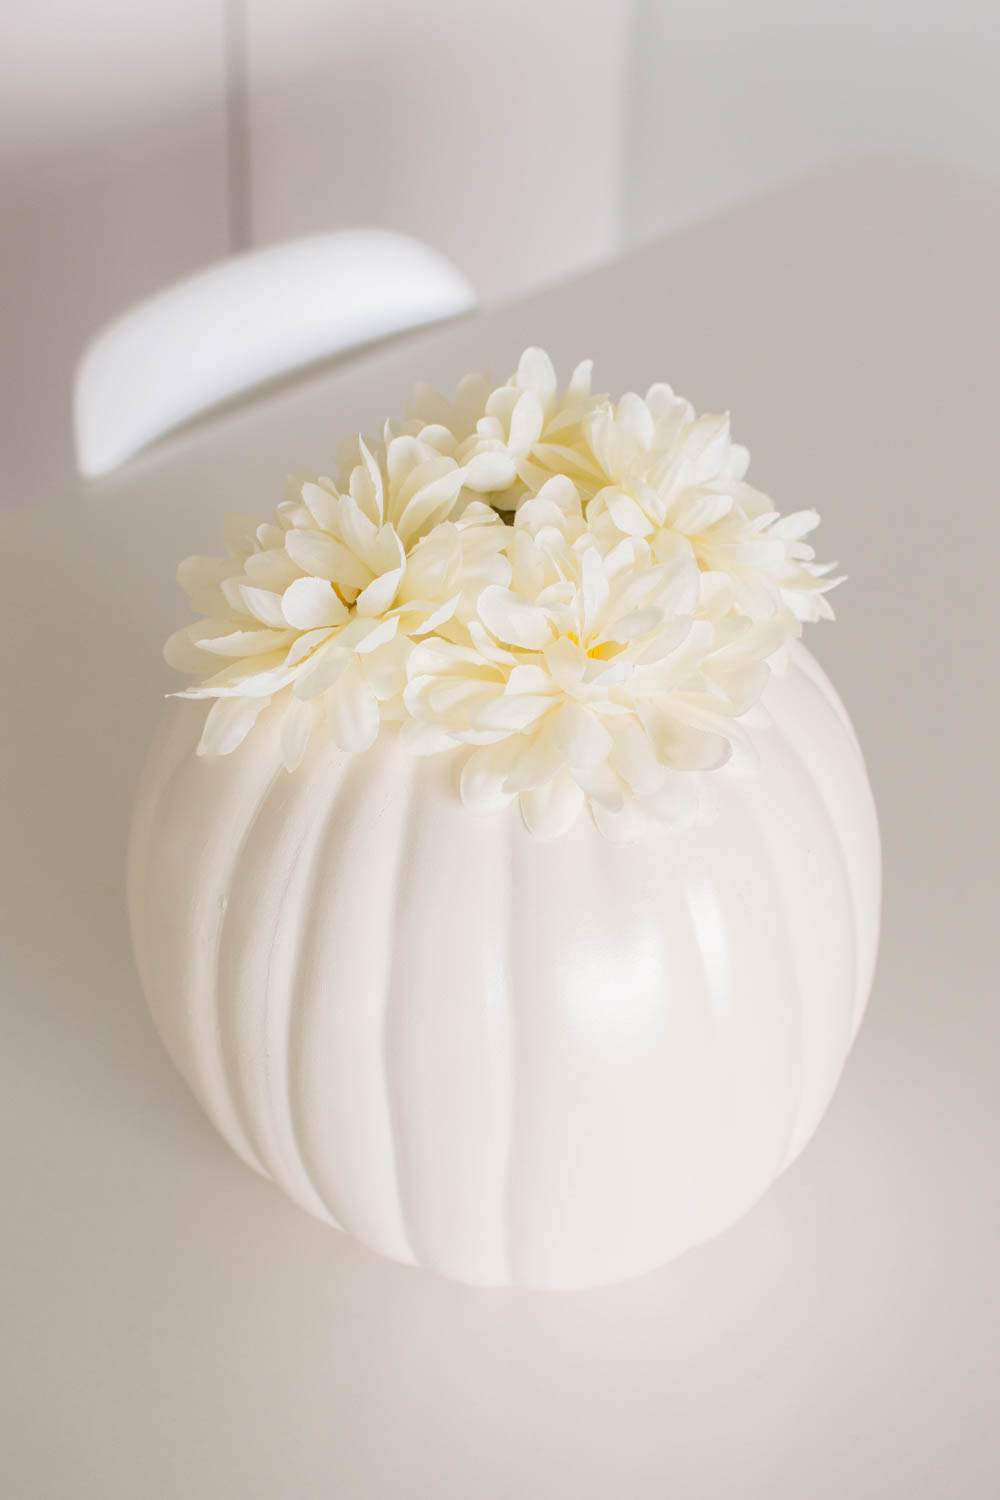 White faux flowers glued on a white plastic pumpkin for white pumpkin decor